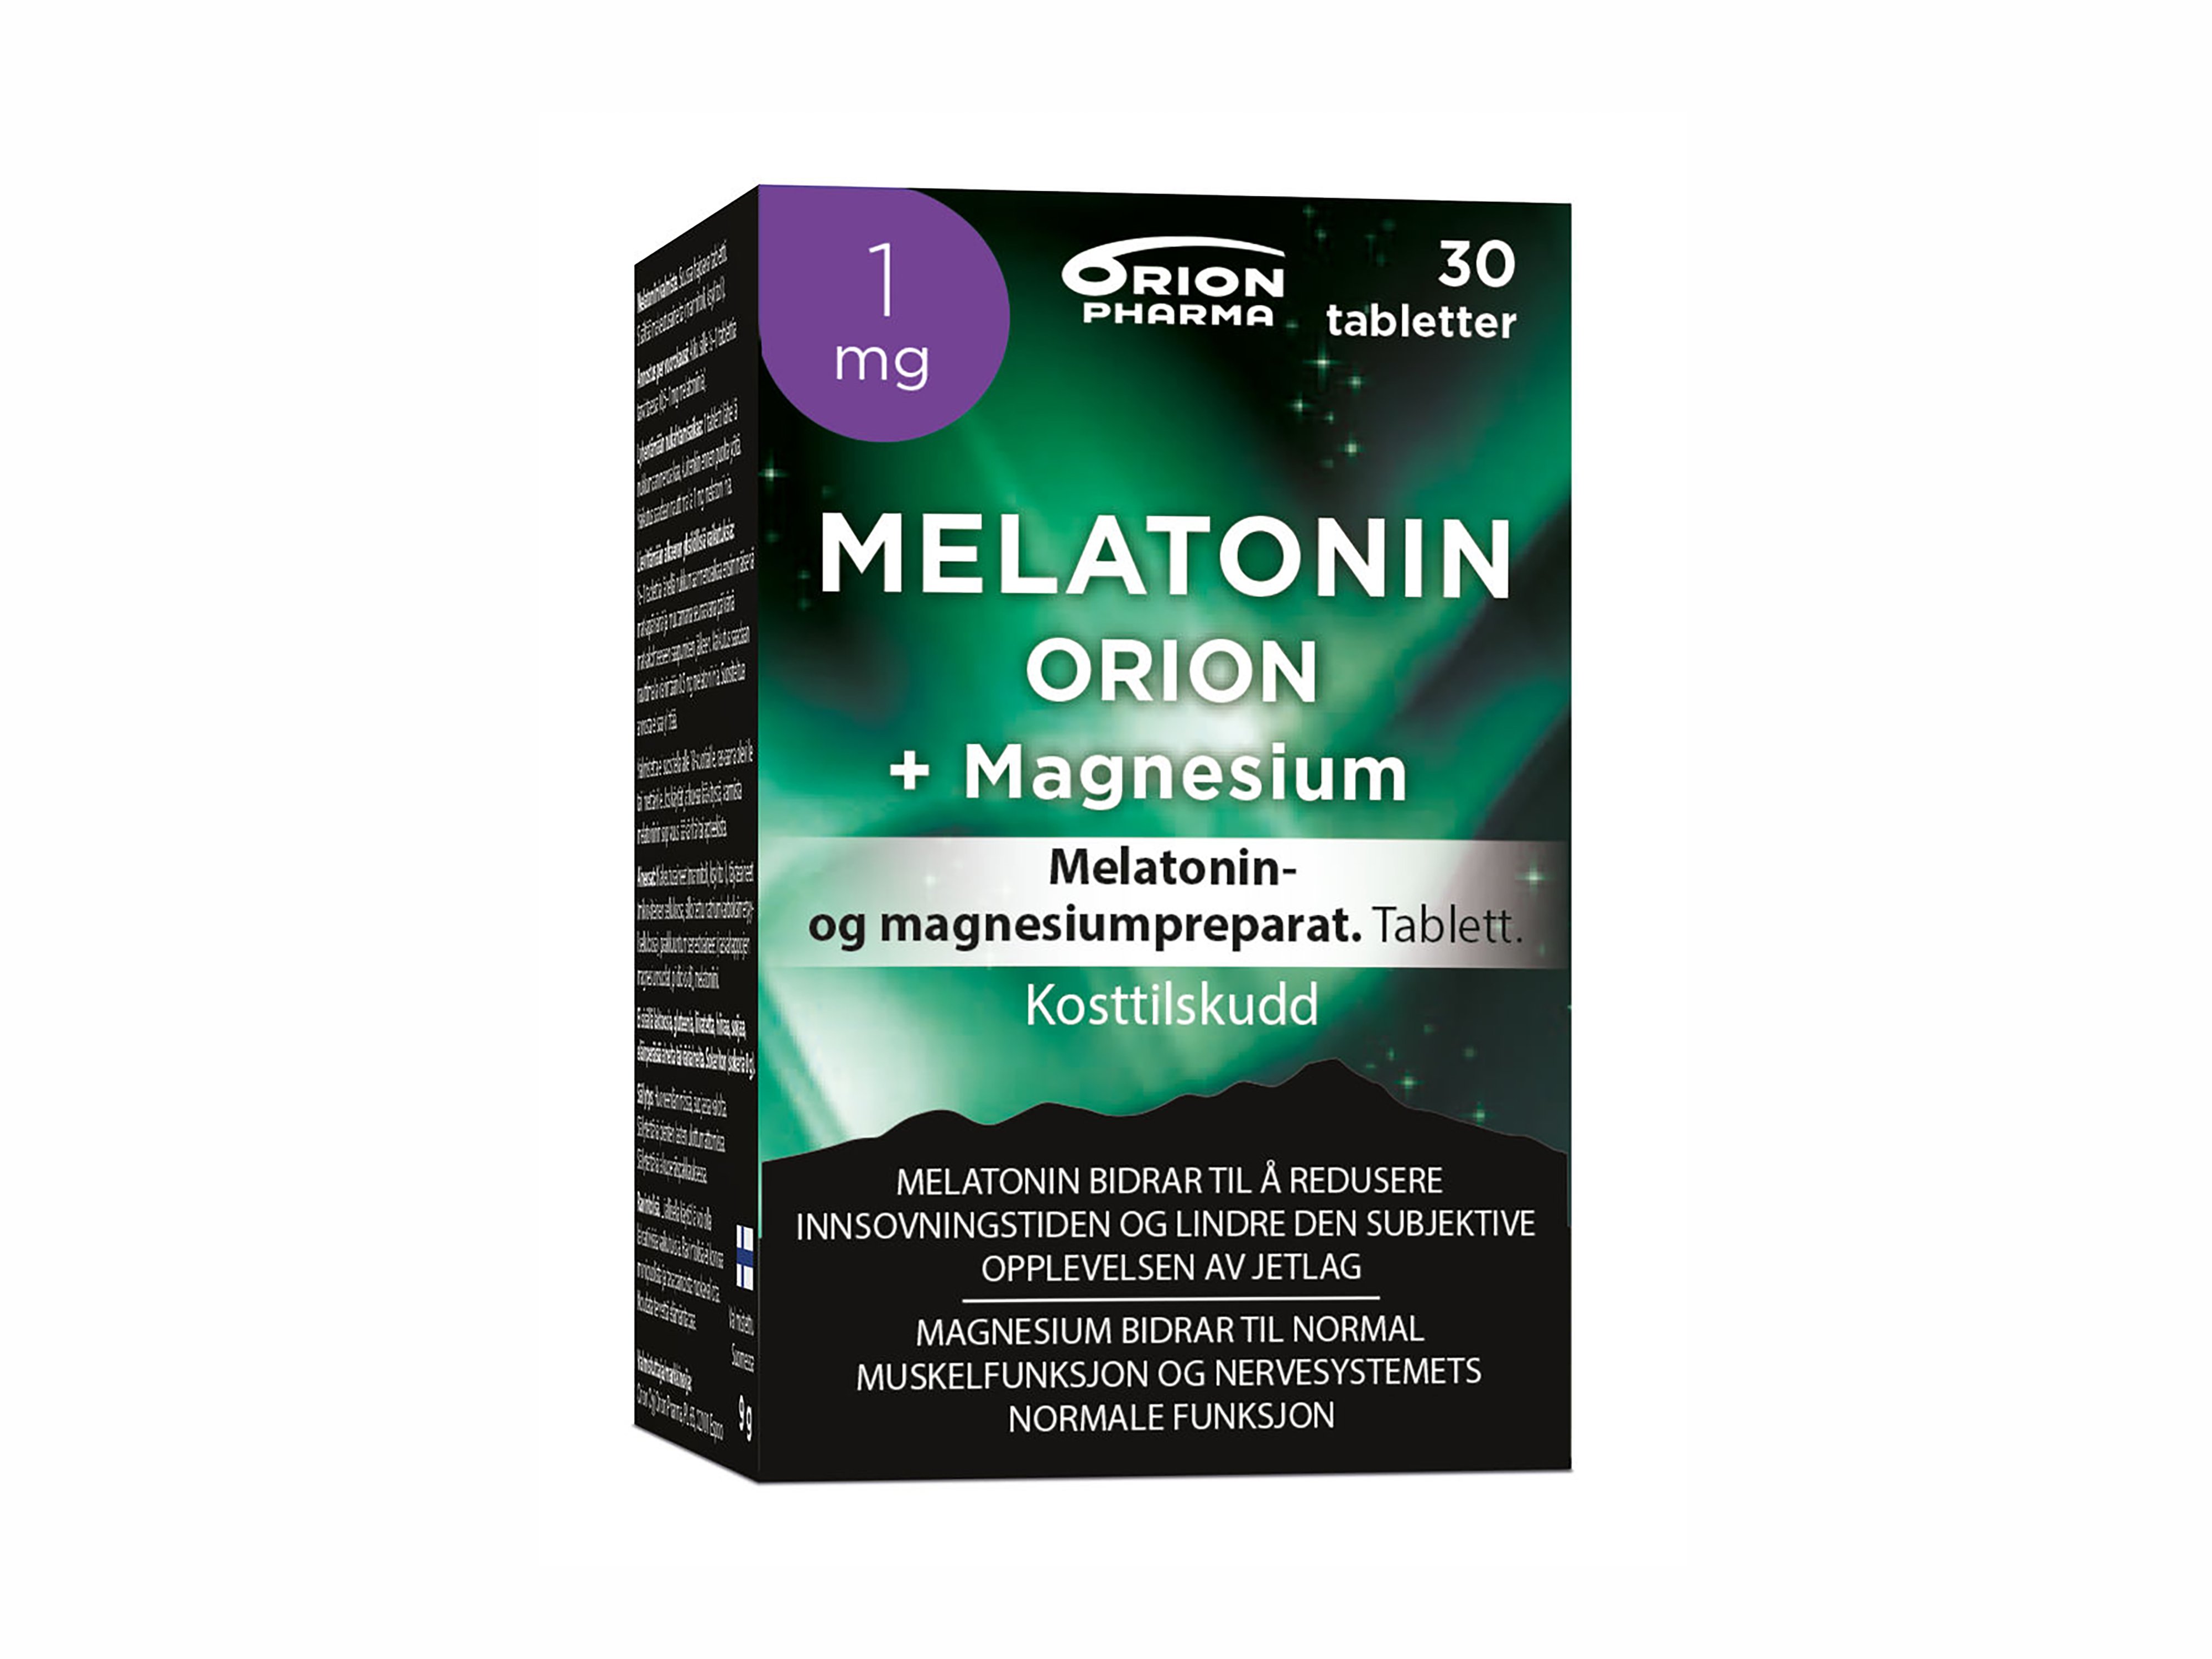 Melatonin Orion 1 mg tablett + Magnesium, 30 stk.